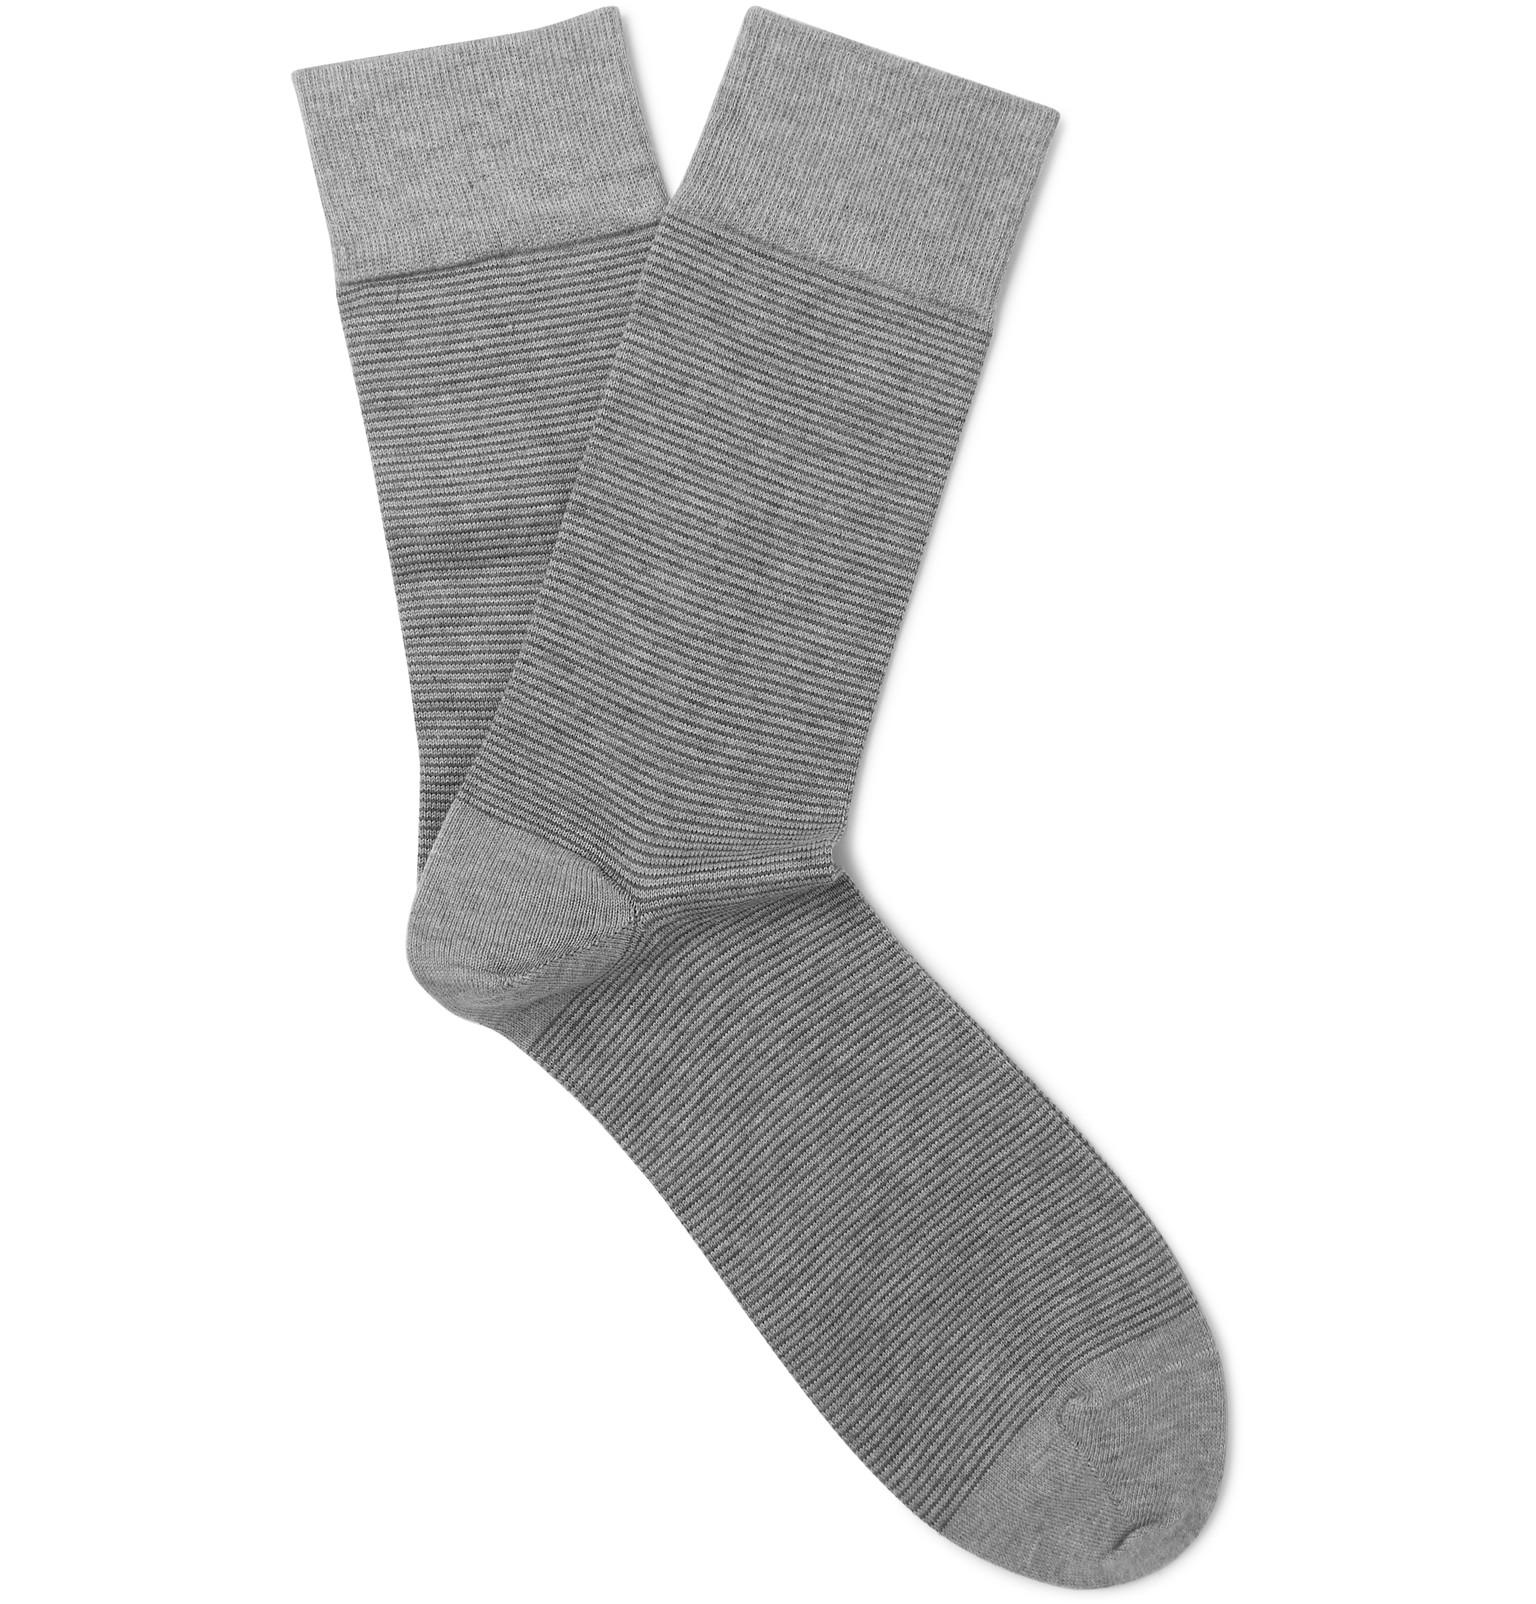 John Smedley Striped Sea Island Cotton-blend Socks in Gray for Men - Lyst